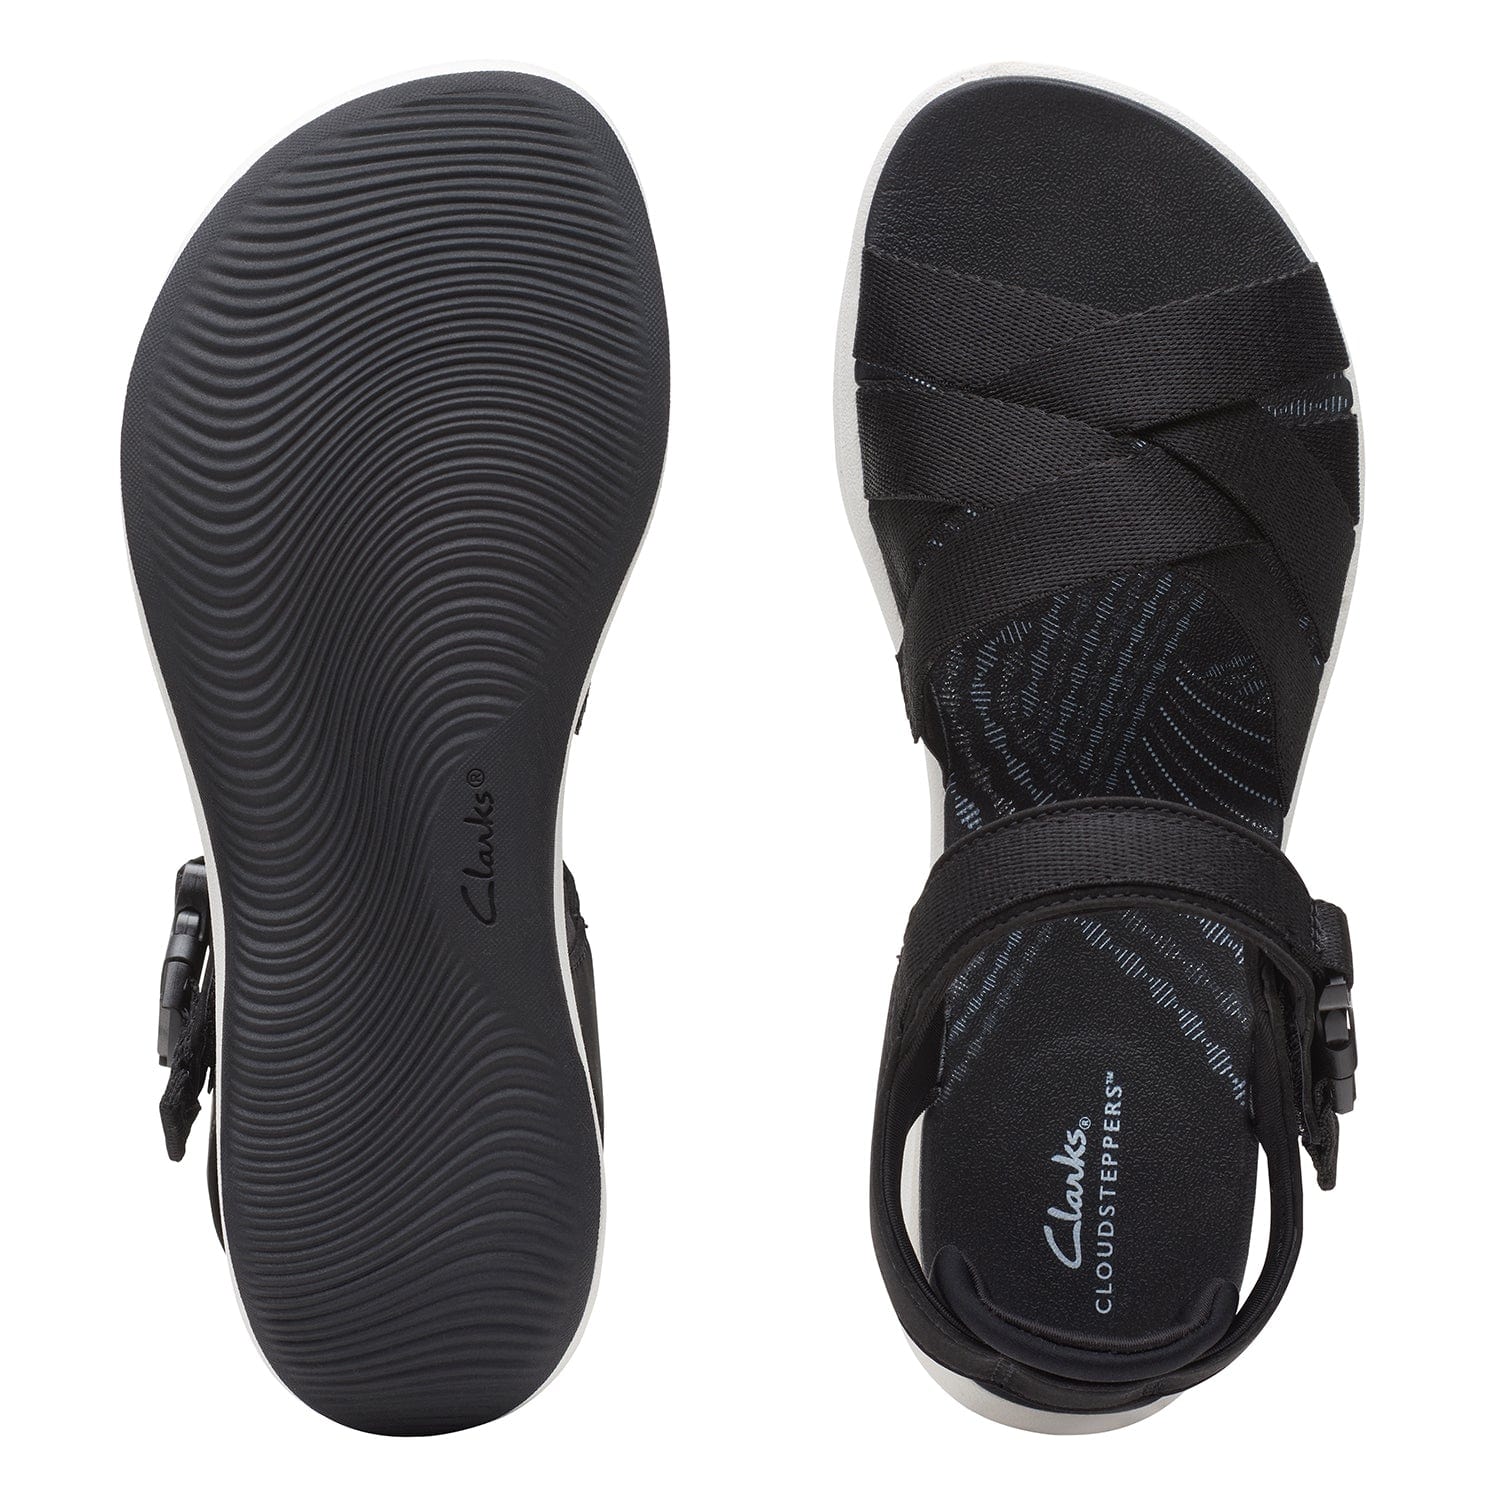 Clarks Mira Tide Sandals - Black - 261653414 - D Width (Standard Fit)